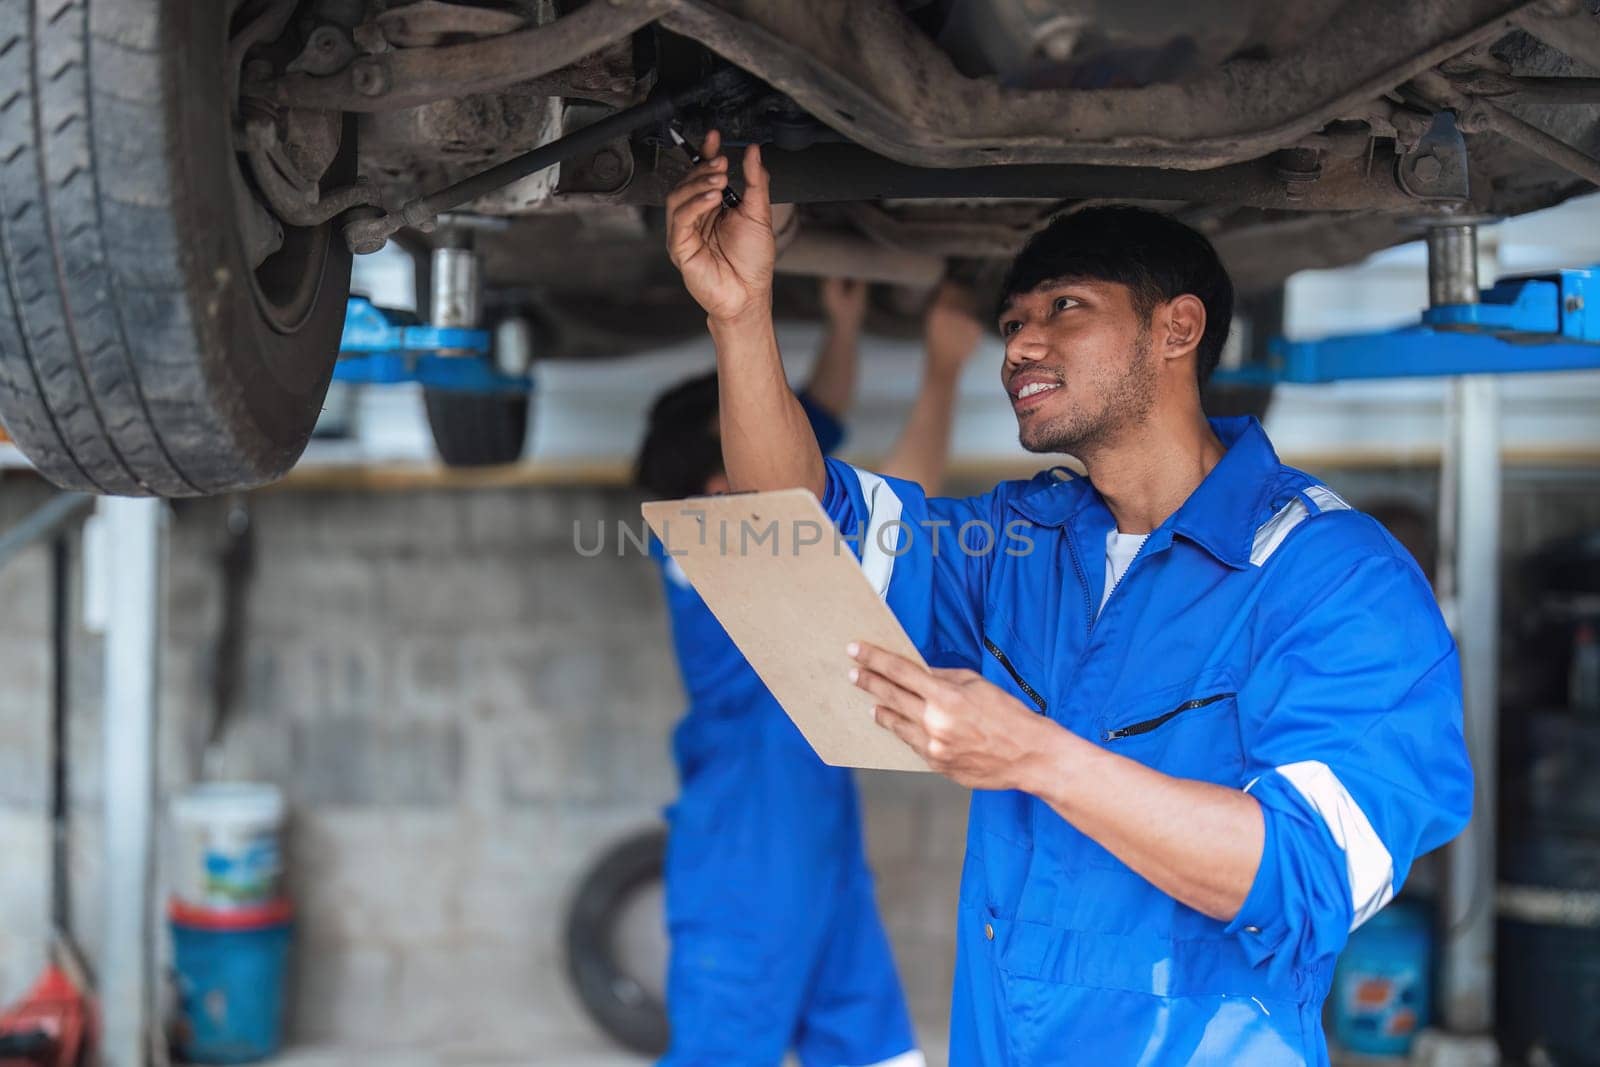 Vehicle service maintenance asian man checking under car condition in garage. Automotive mechanic maintenance checklist document. Car repair service concept.